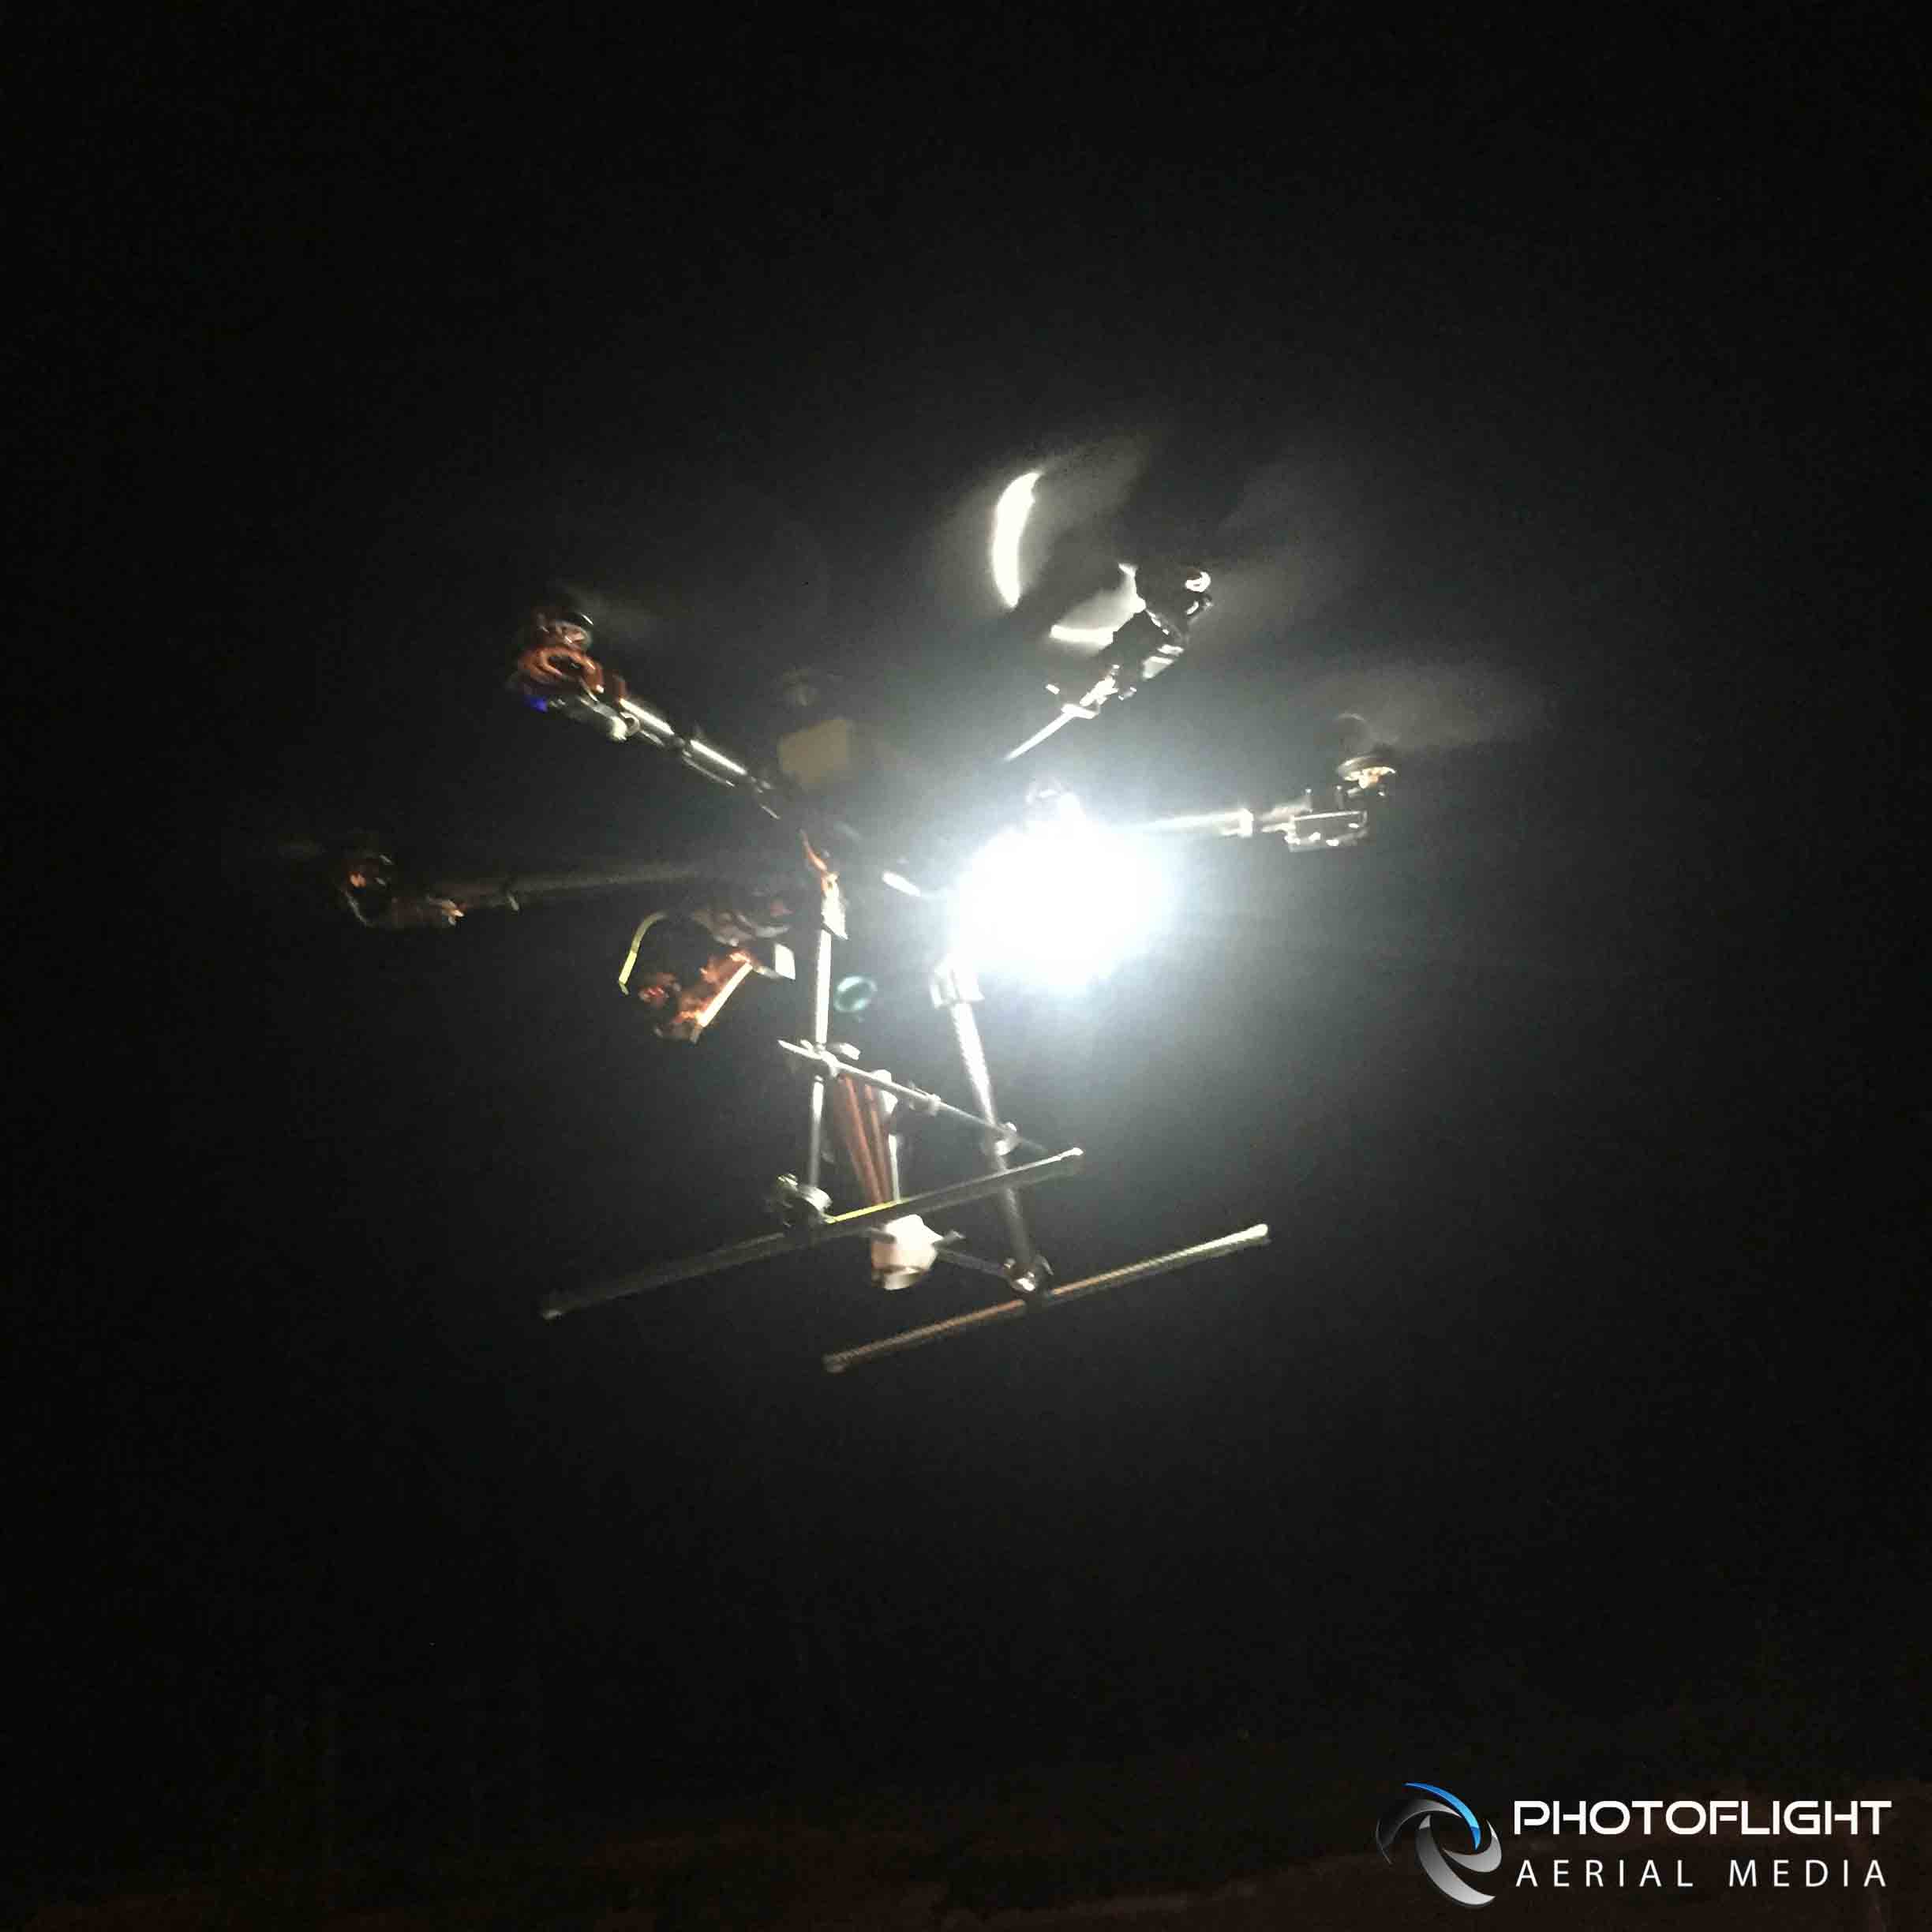 Drone Light Footage at Night